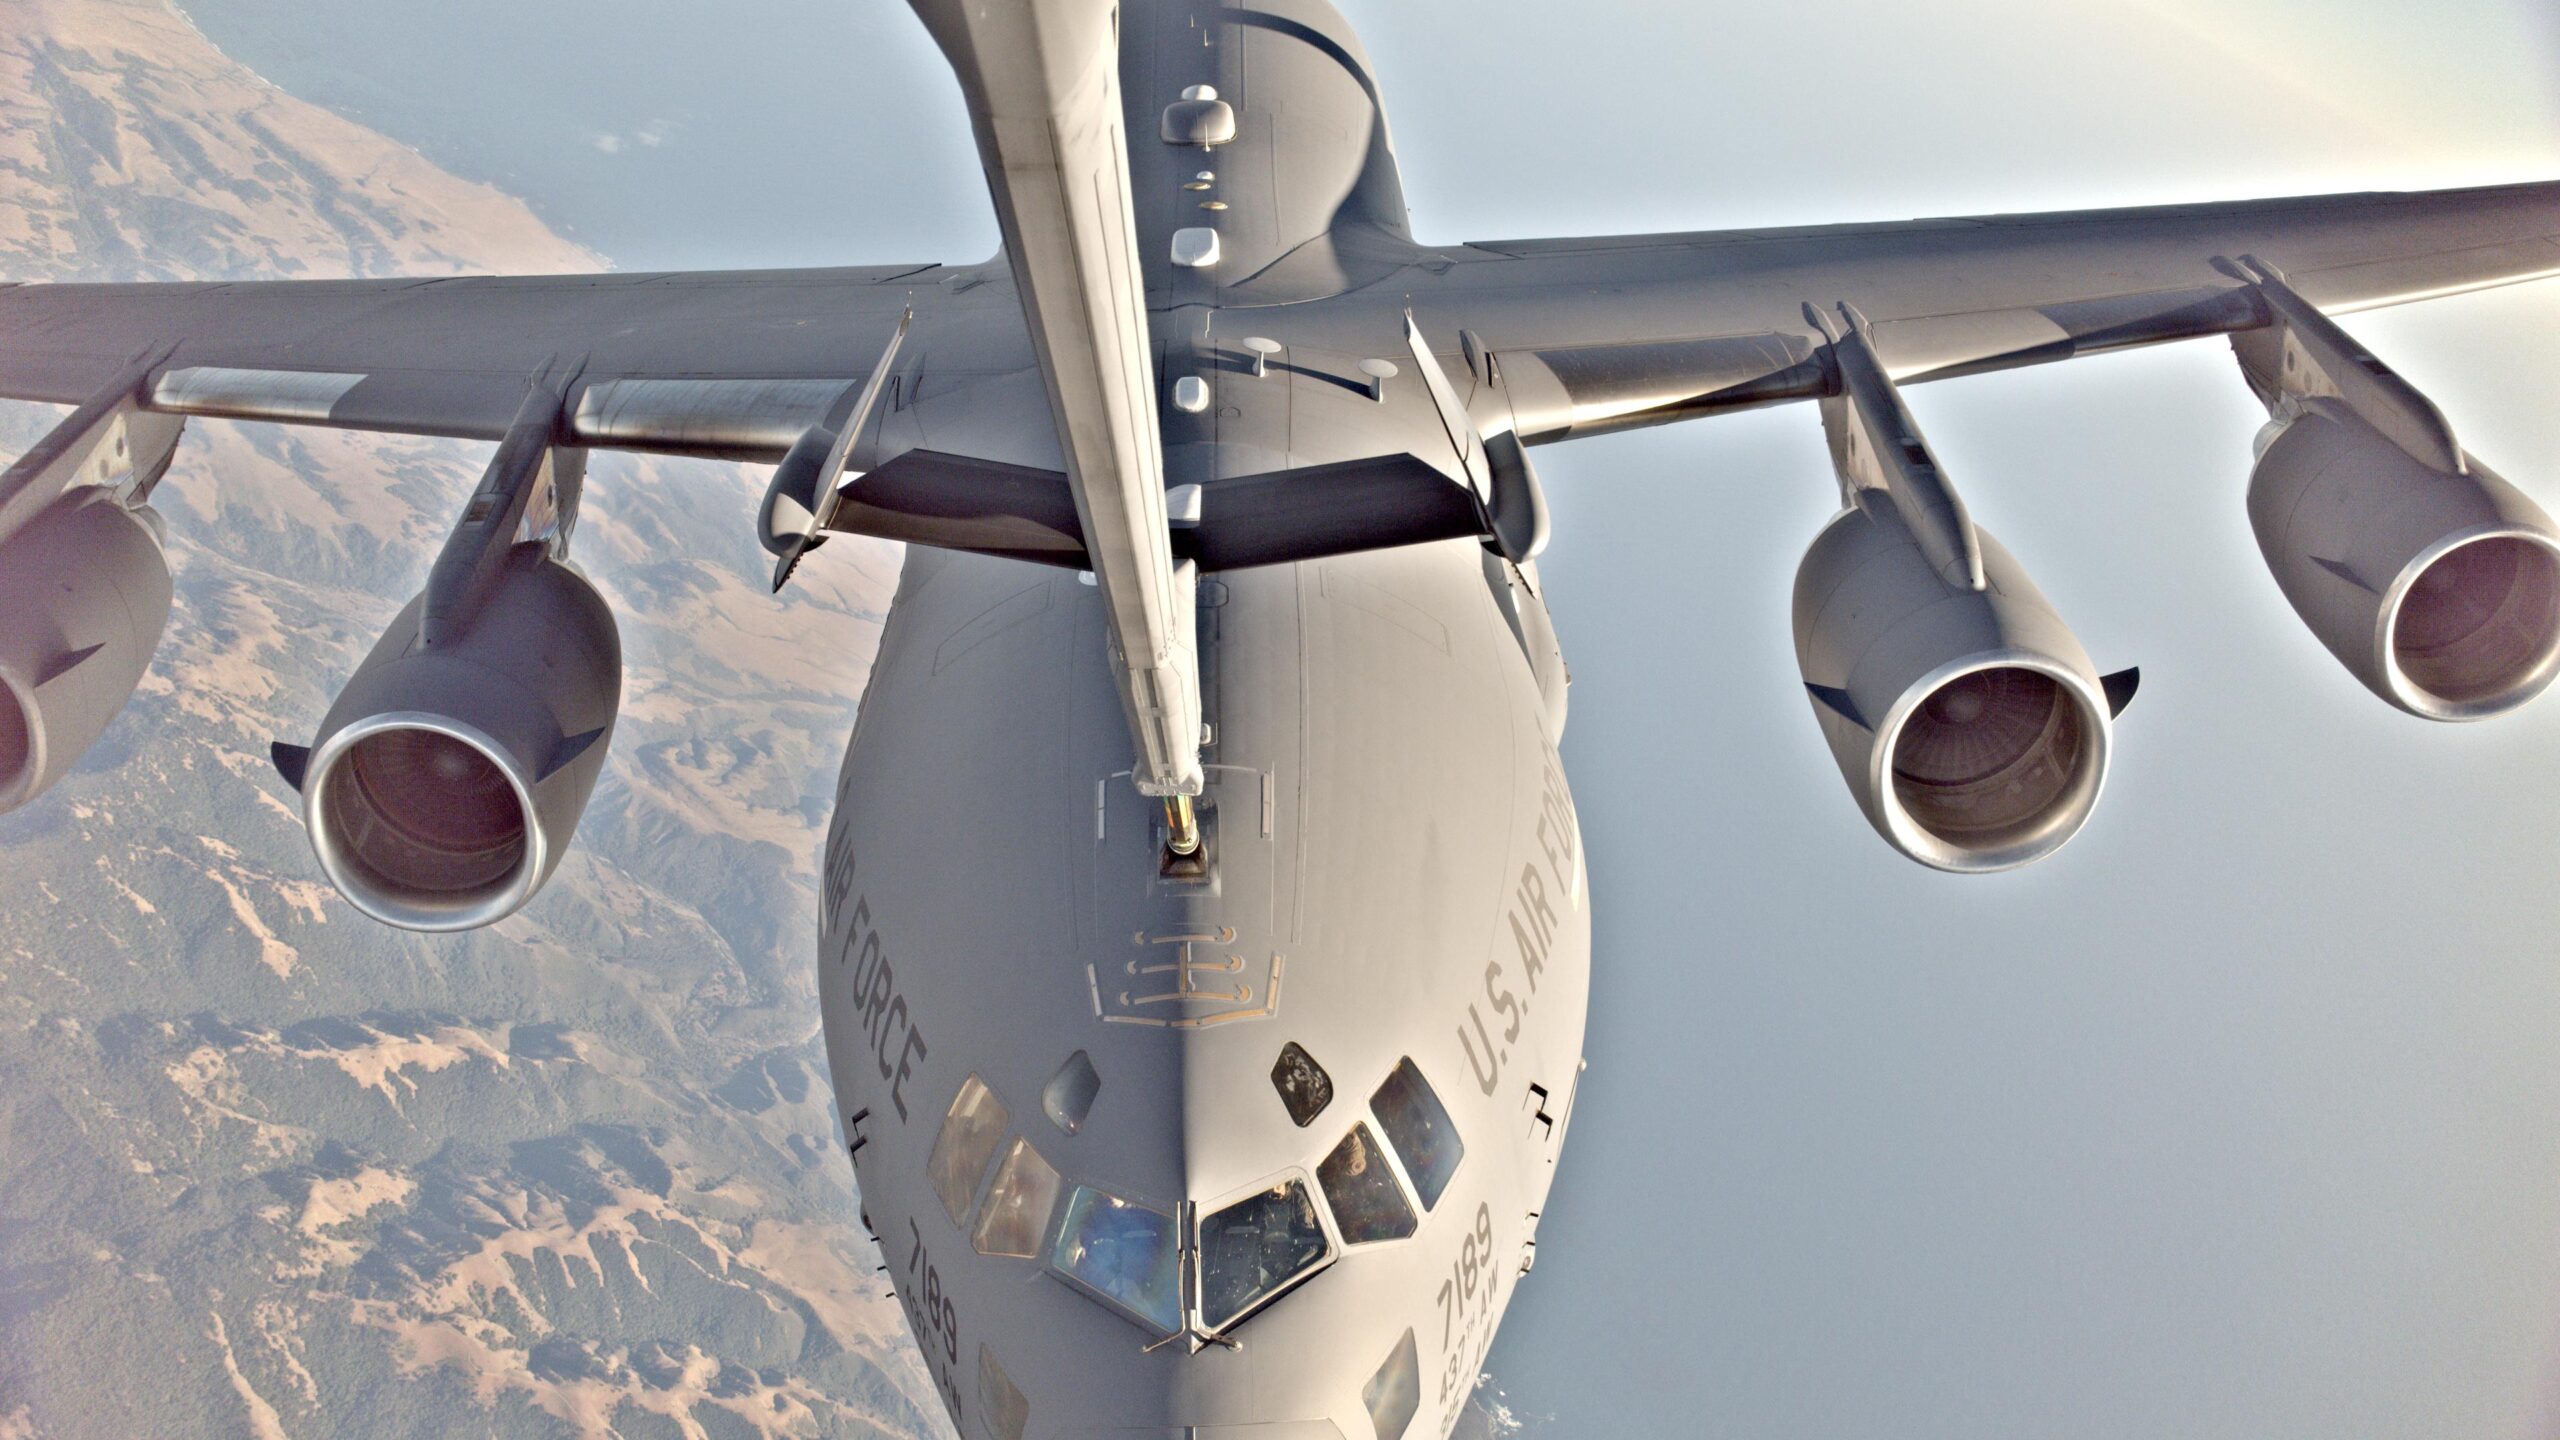 RVS 2.0 image – KC-46 refueling C-17